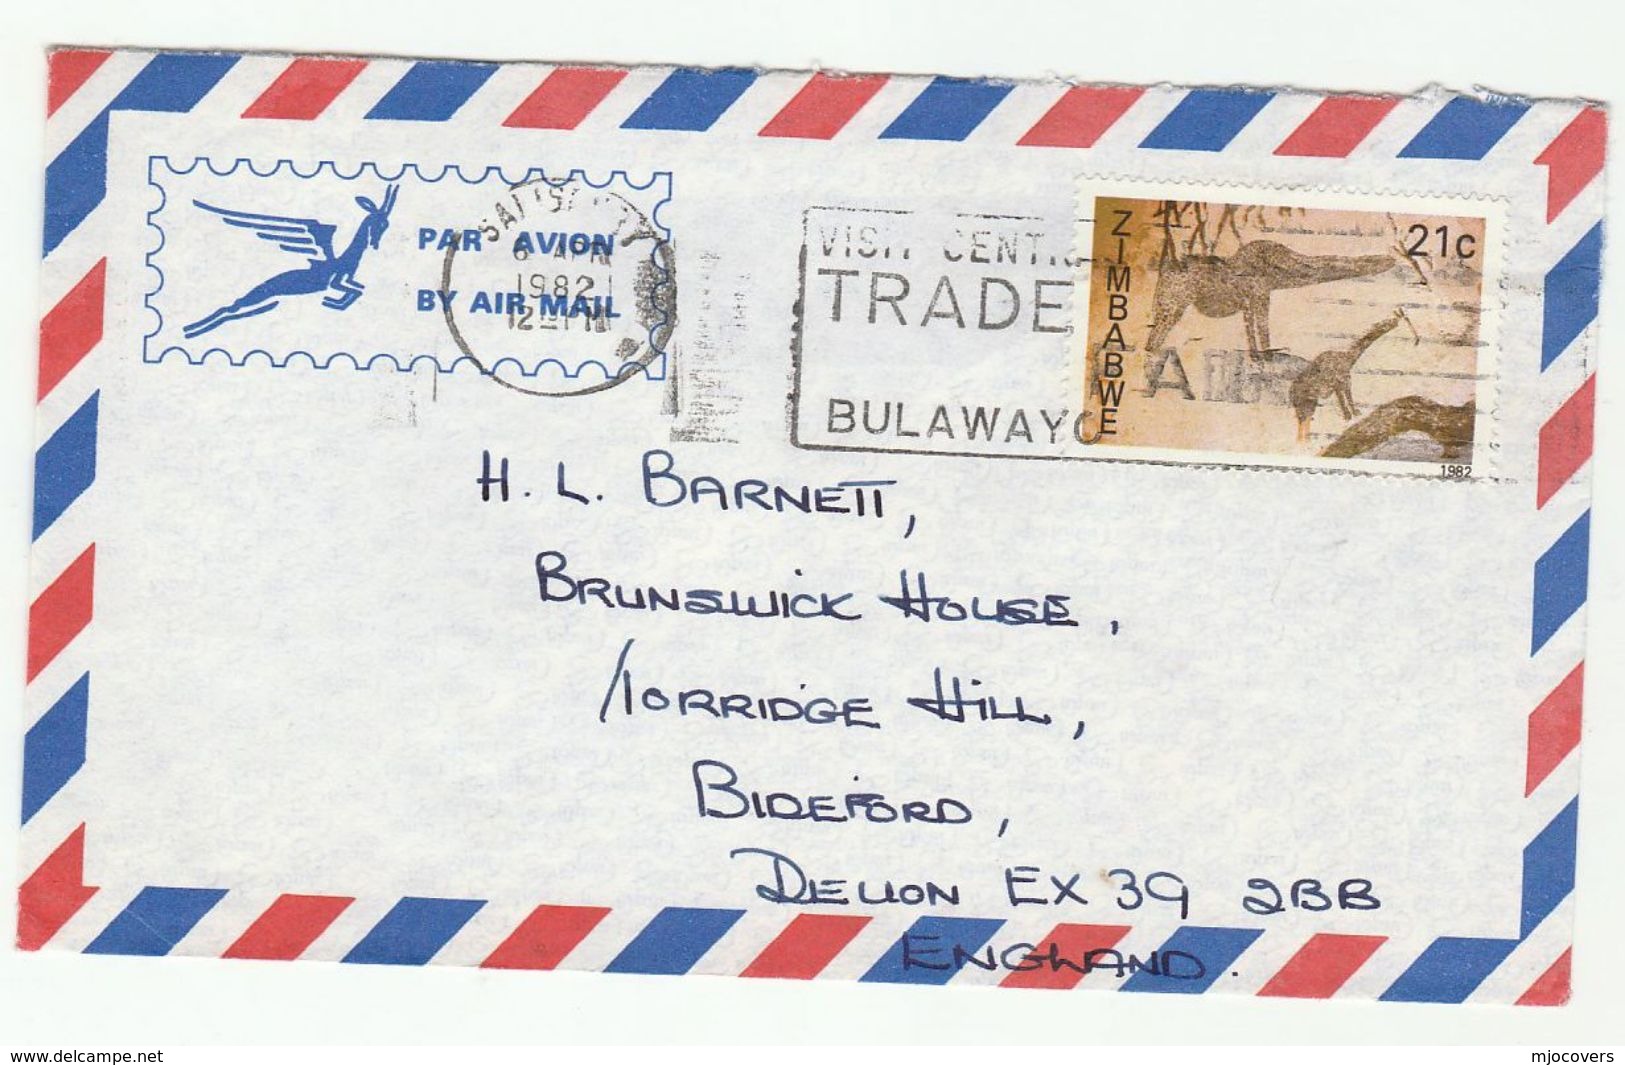 1982 ZIMBABWE COVER SLOGAN Pmk  BULAWAYO TRADE FAIR  Giraffe Stamps - Zimbabwe (1980-...)